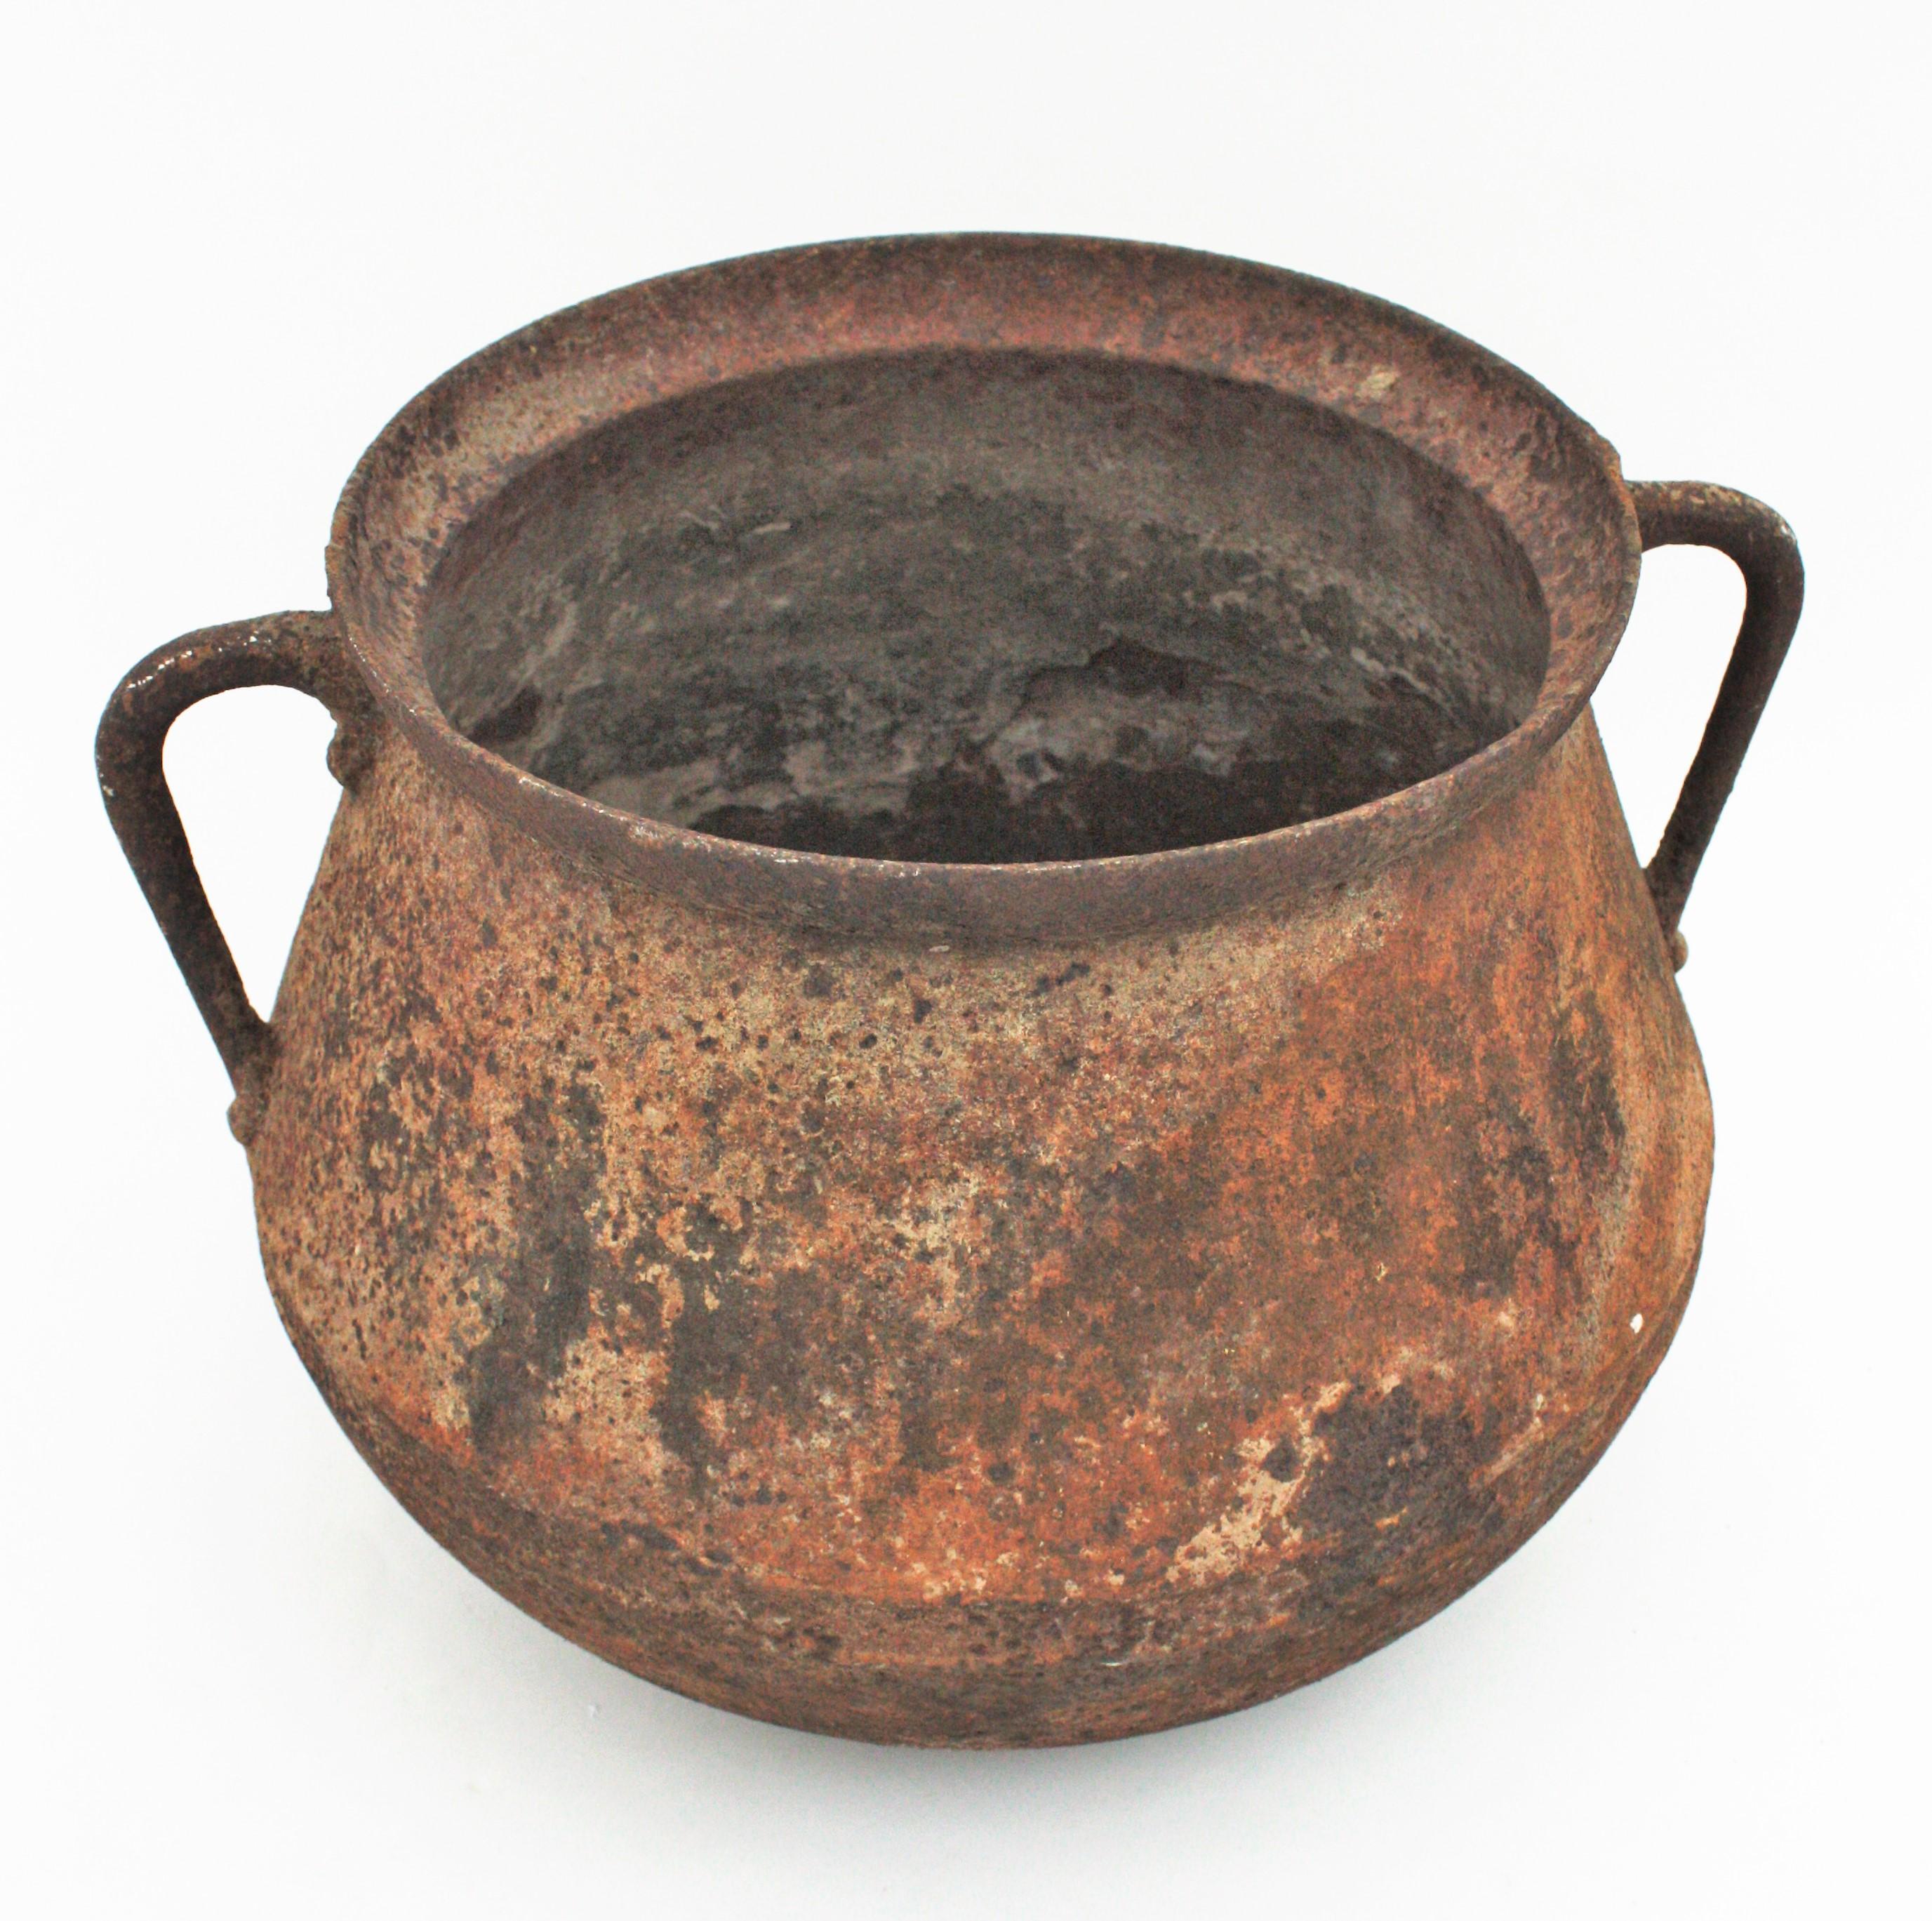 Cast Spanish Rustic Iron Cauldron Pot or Vessel with Rusty Original Patina For Sale